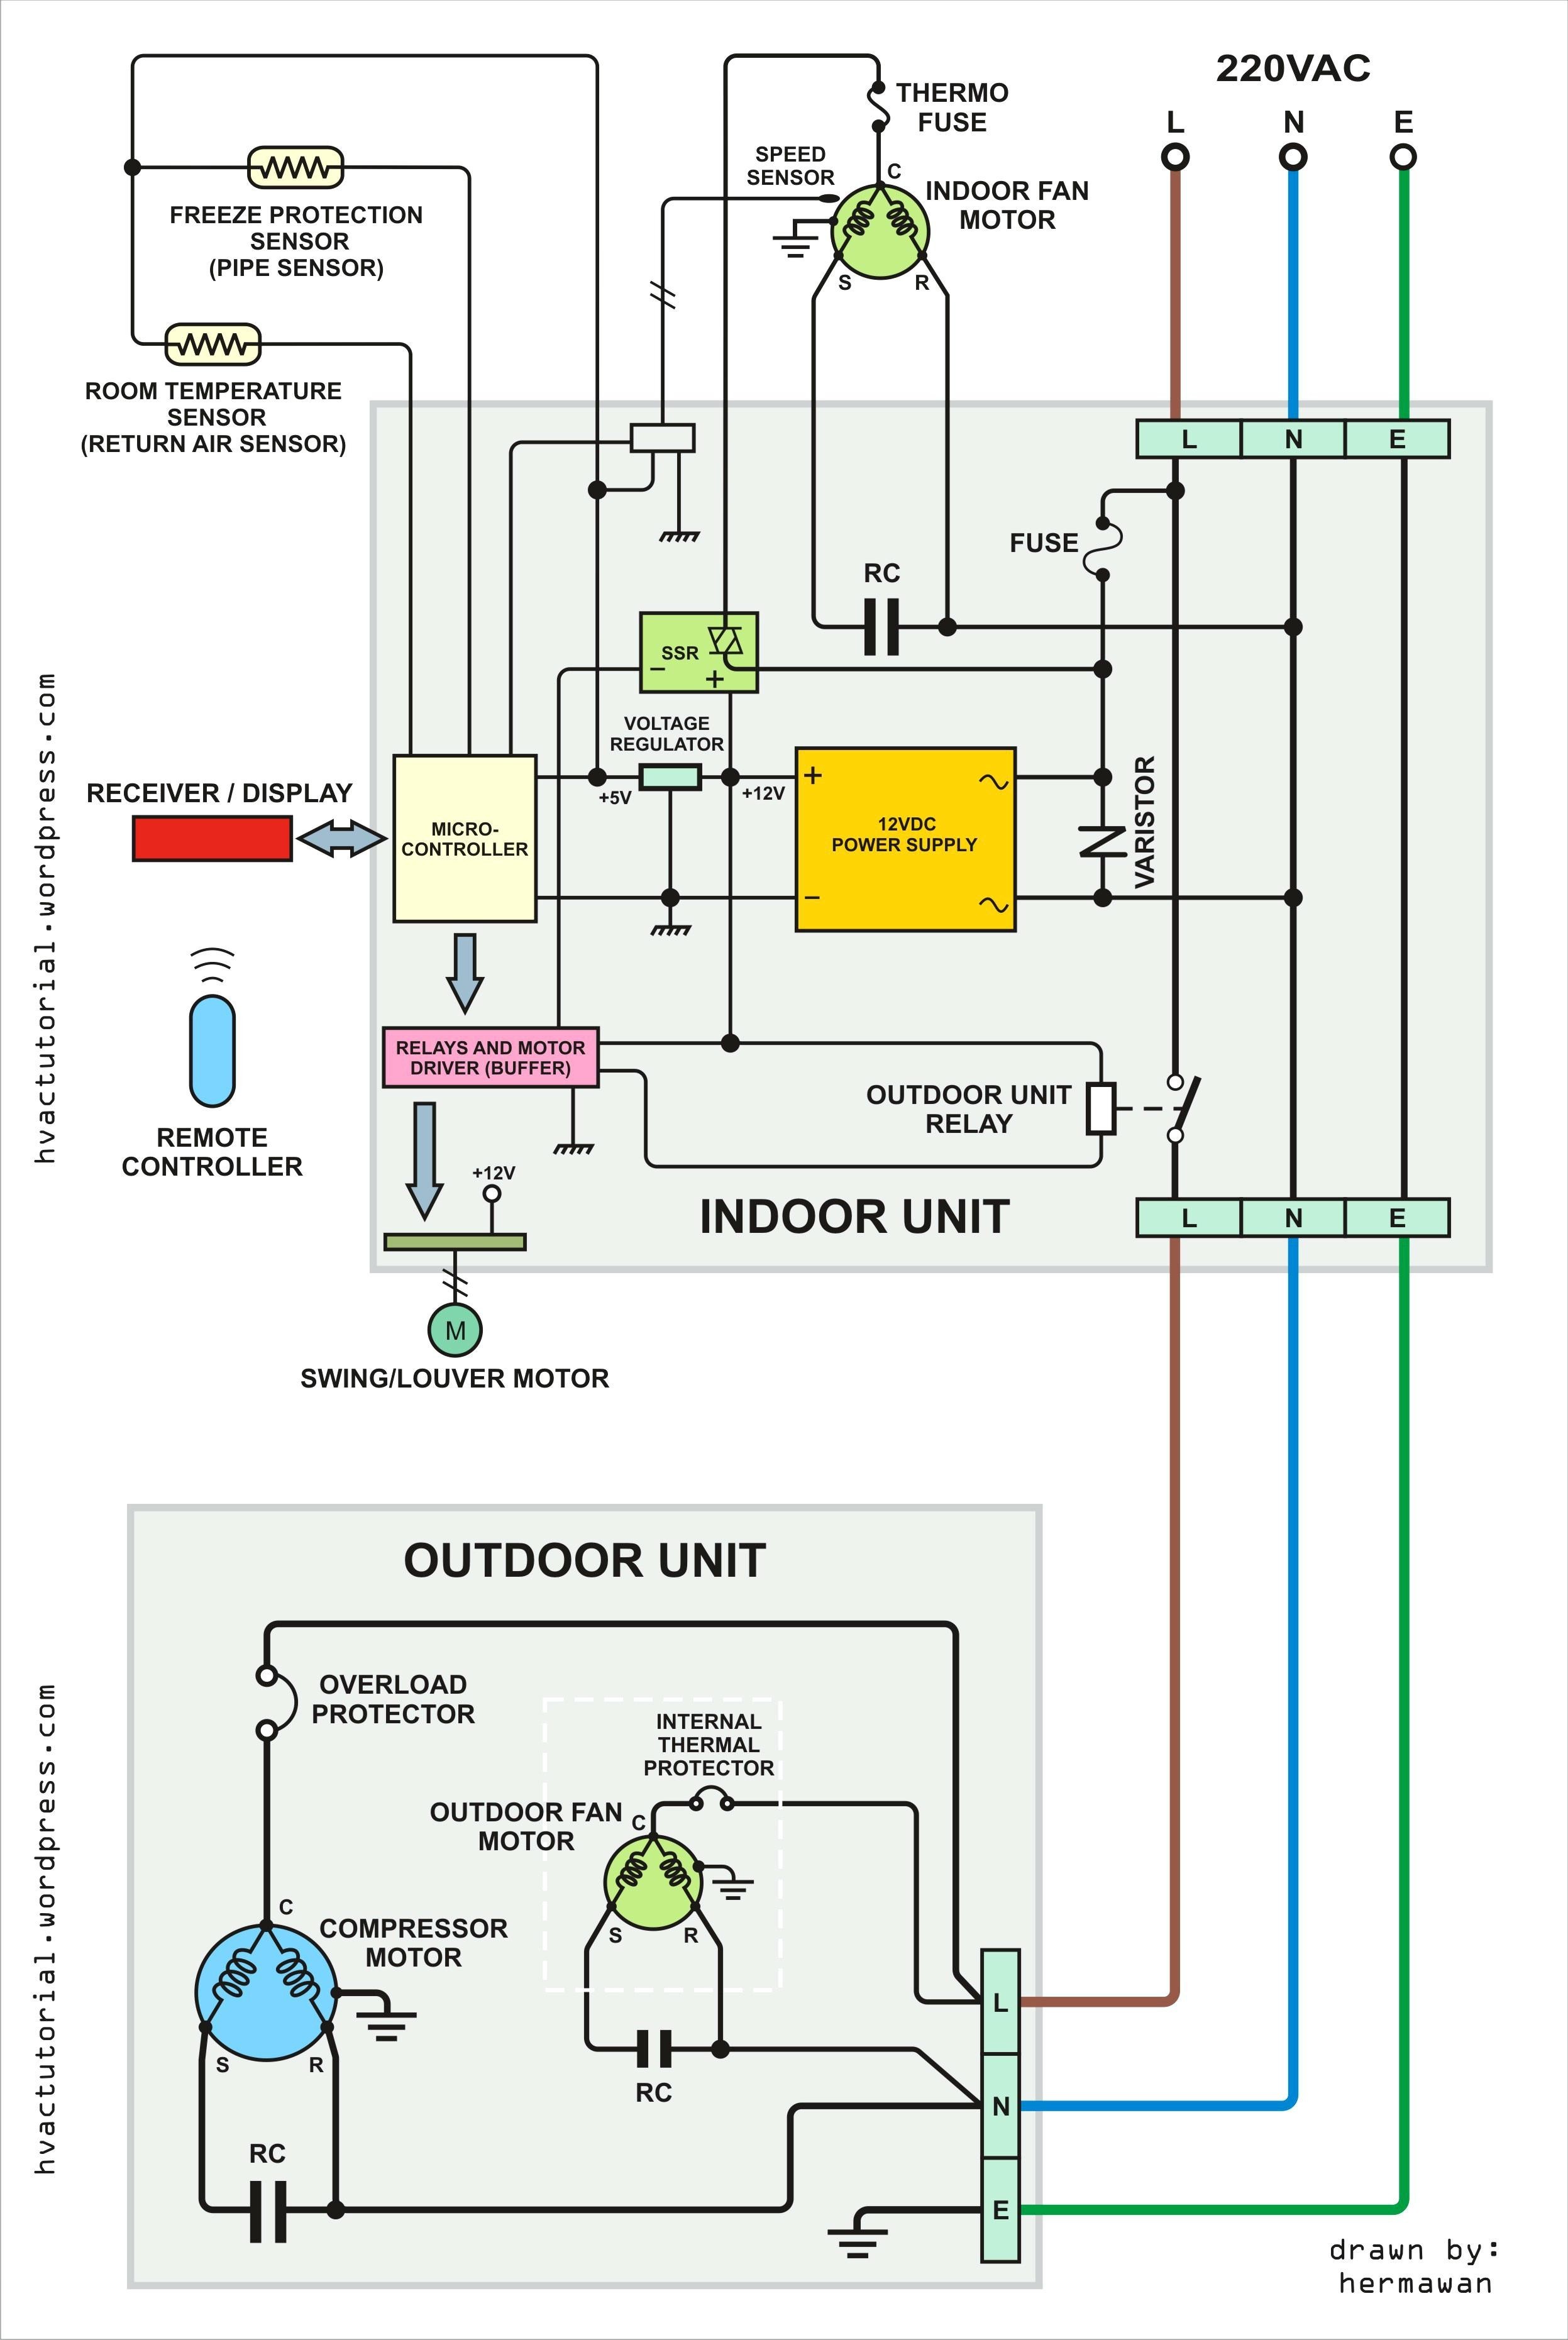 Bard Heat Pump Wiring Diagram Rheem Furnace Wiring Experts Wiring Diagram • Of Bard Heat Pump Wiring Diagram